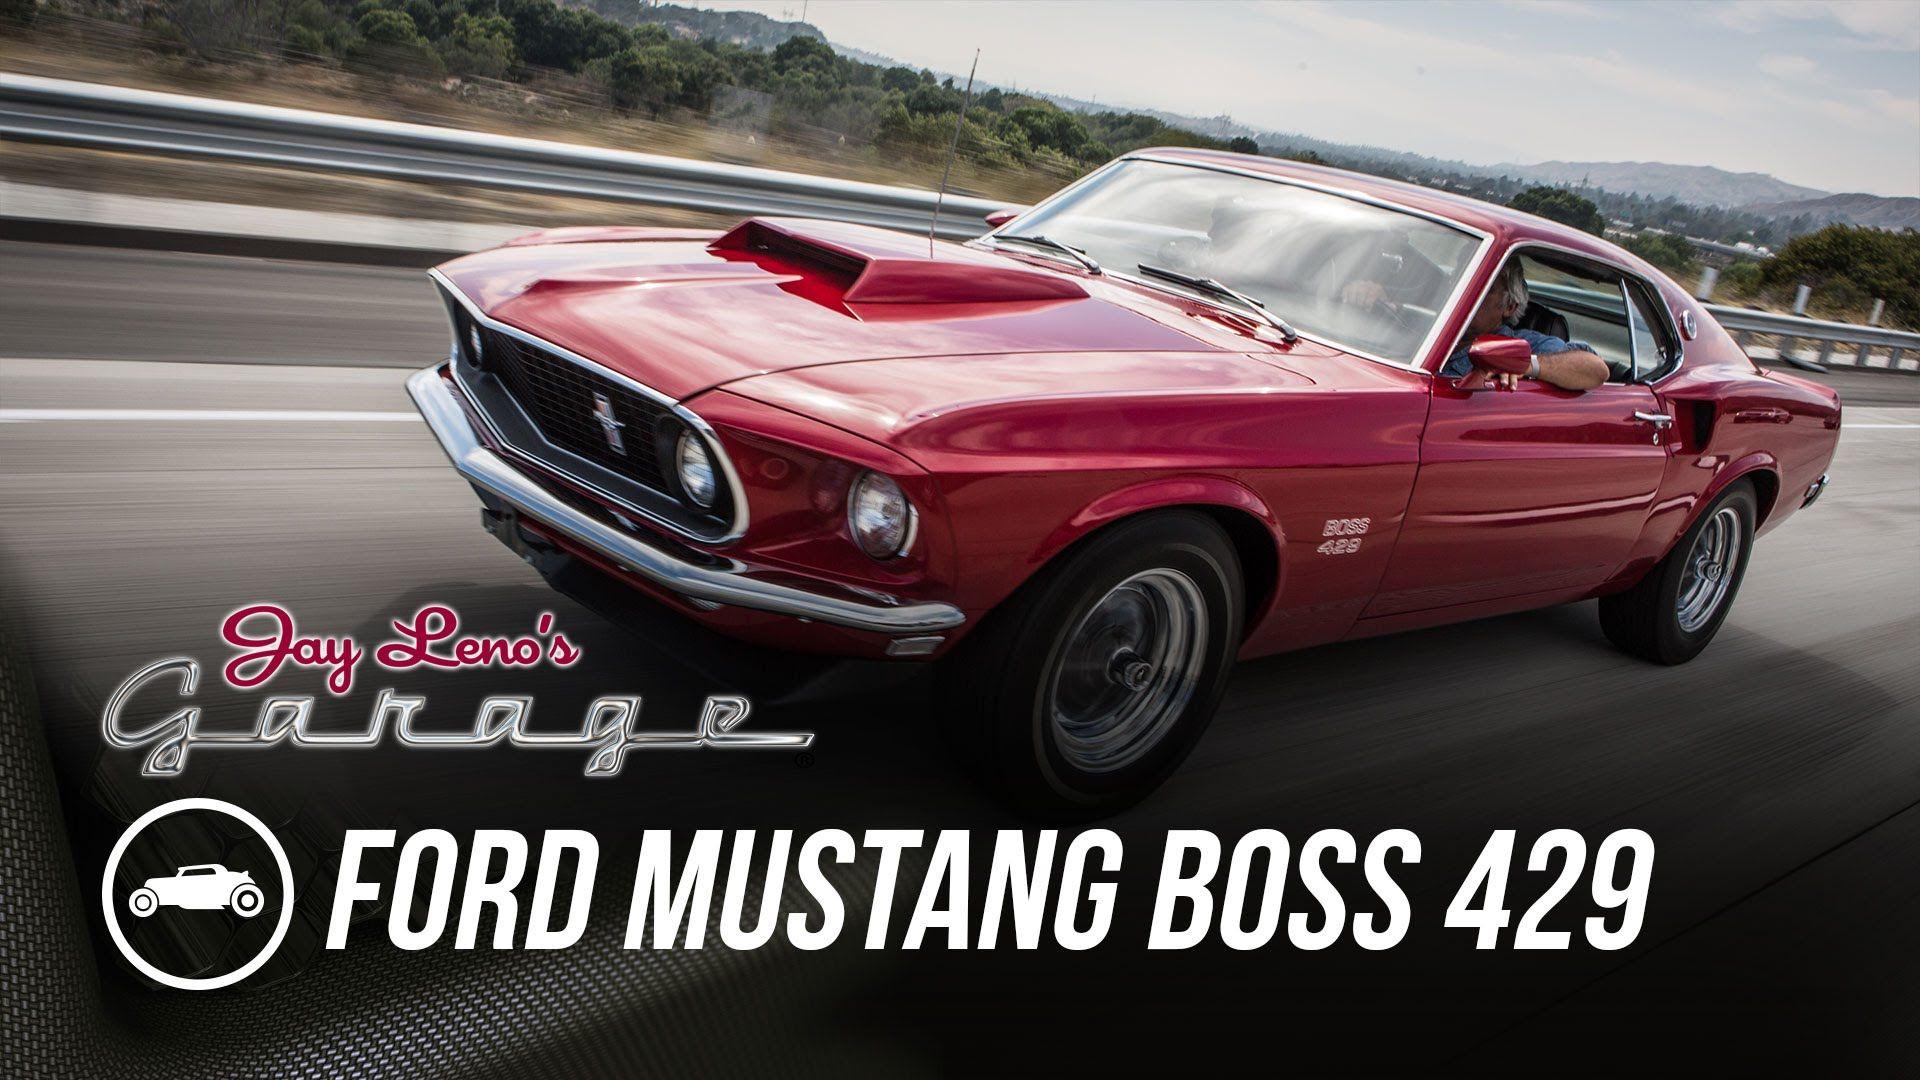 Ford Mustang Boss 429 Leno's Garage